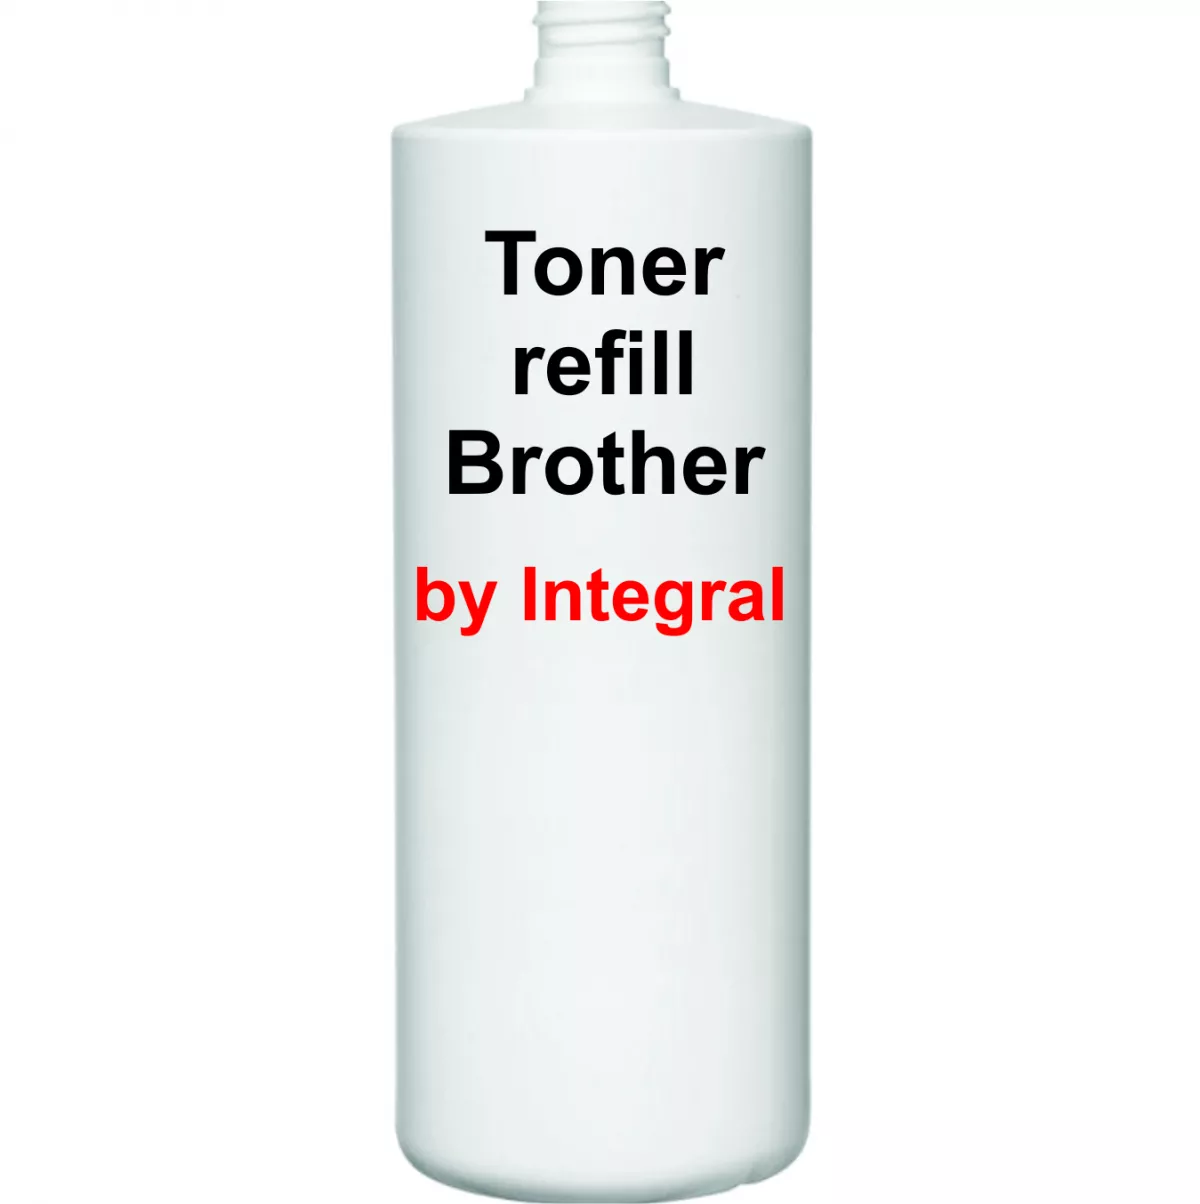 Toner refill Brother TN2310 TN2320 1000g by Integral, [],erefill.ro